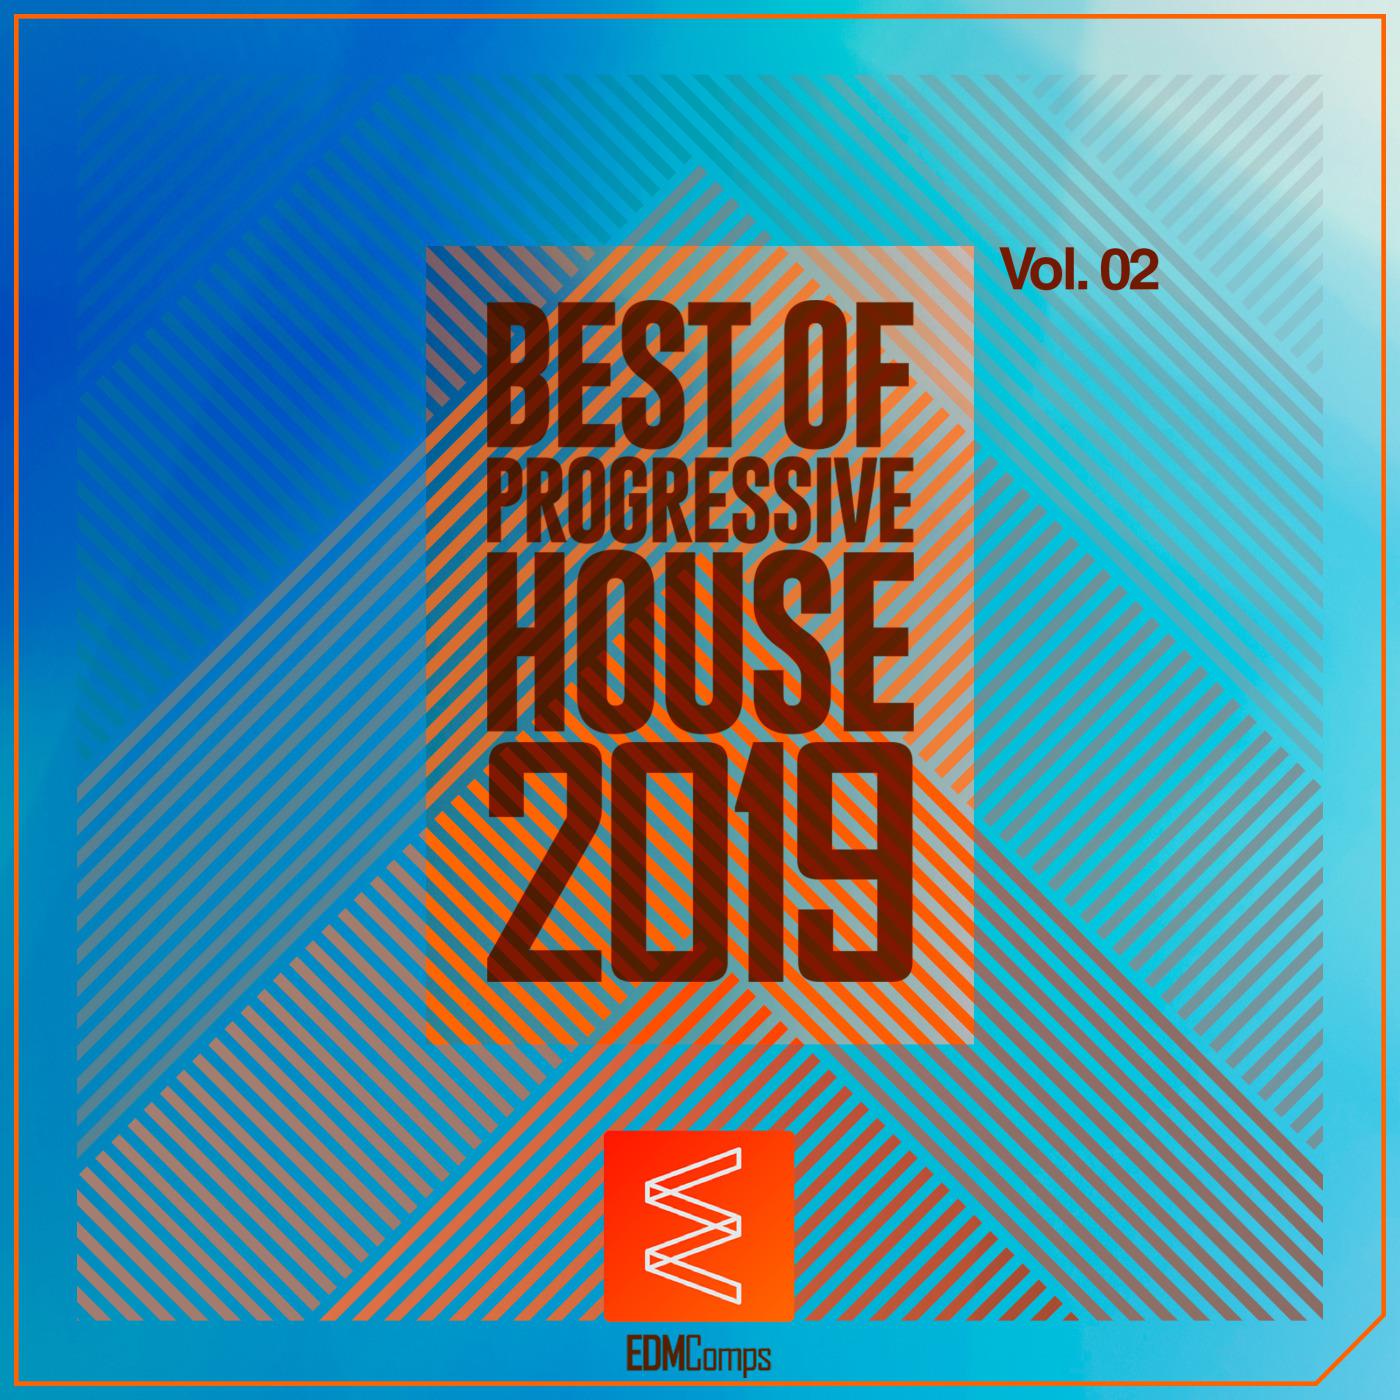 Best of Progressive House 2019, Vol. 02